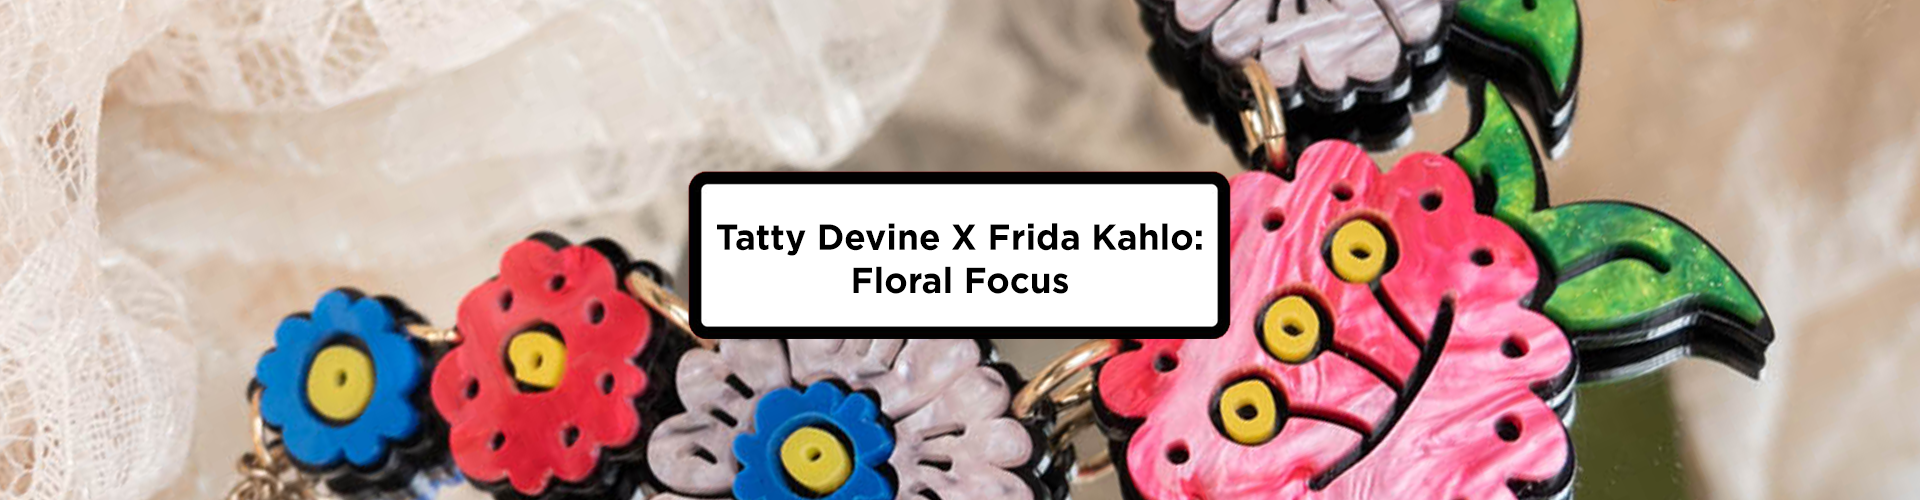 Tatty Devine X Frida Kahlo: Floral Focus